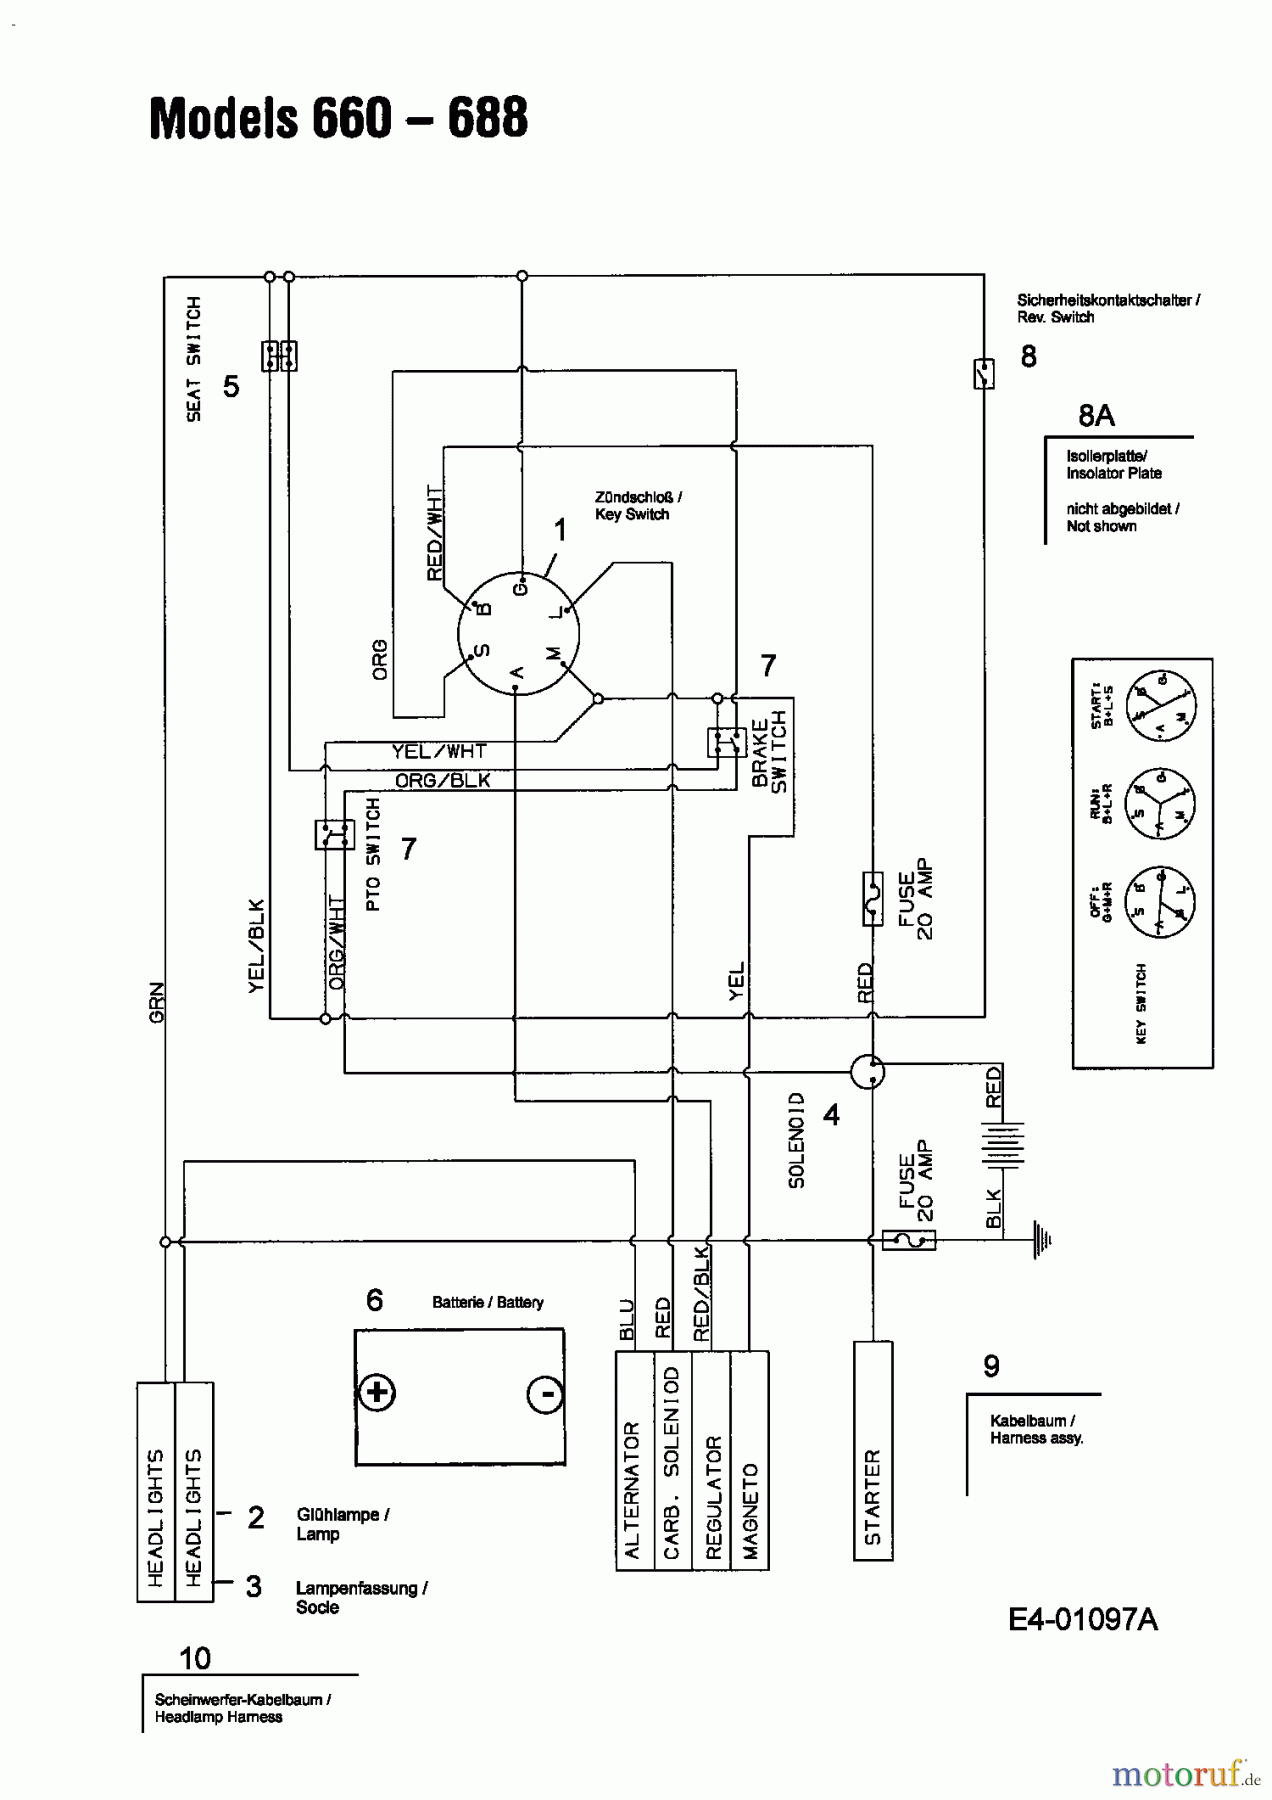  Mastercut Lawn tractors VI 145/107 13AA685G659  (2003) Wiring diagram